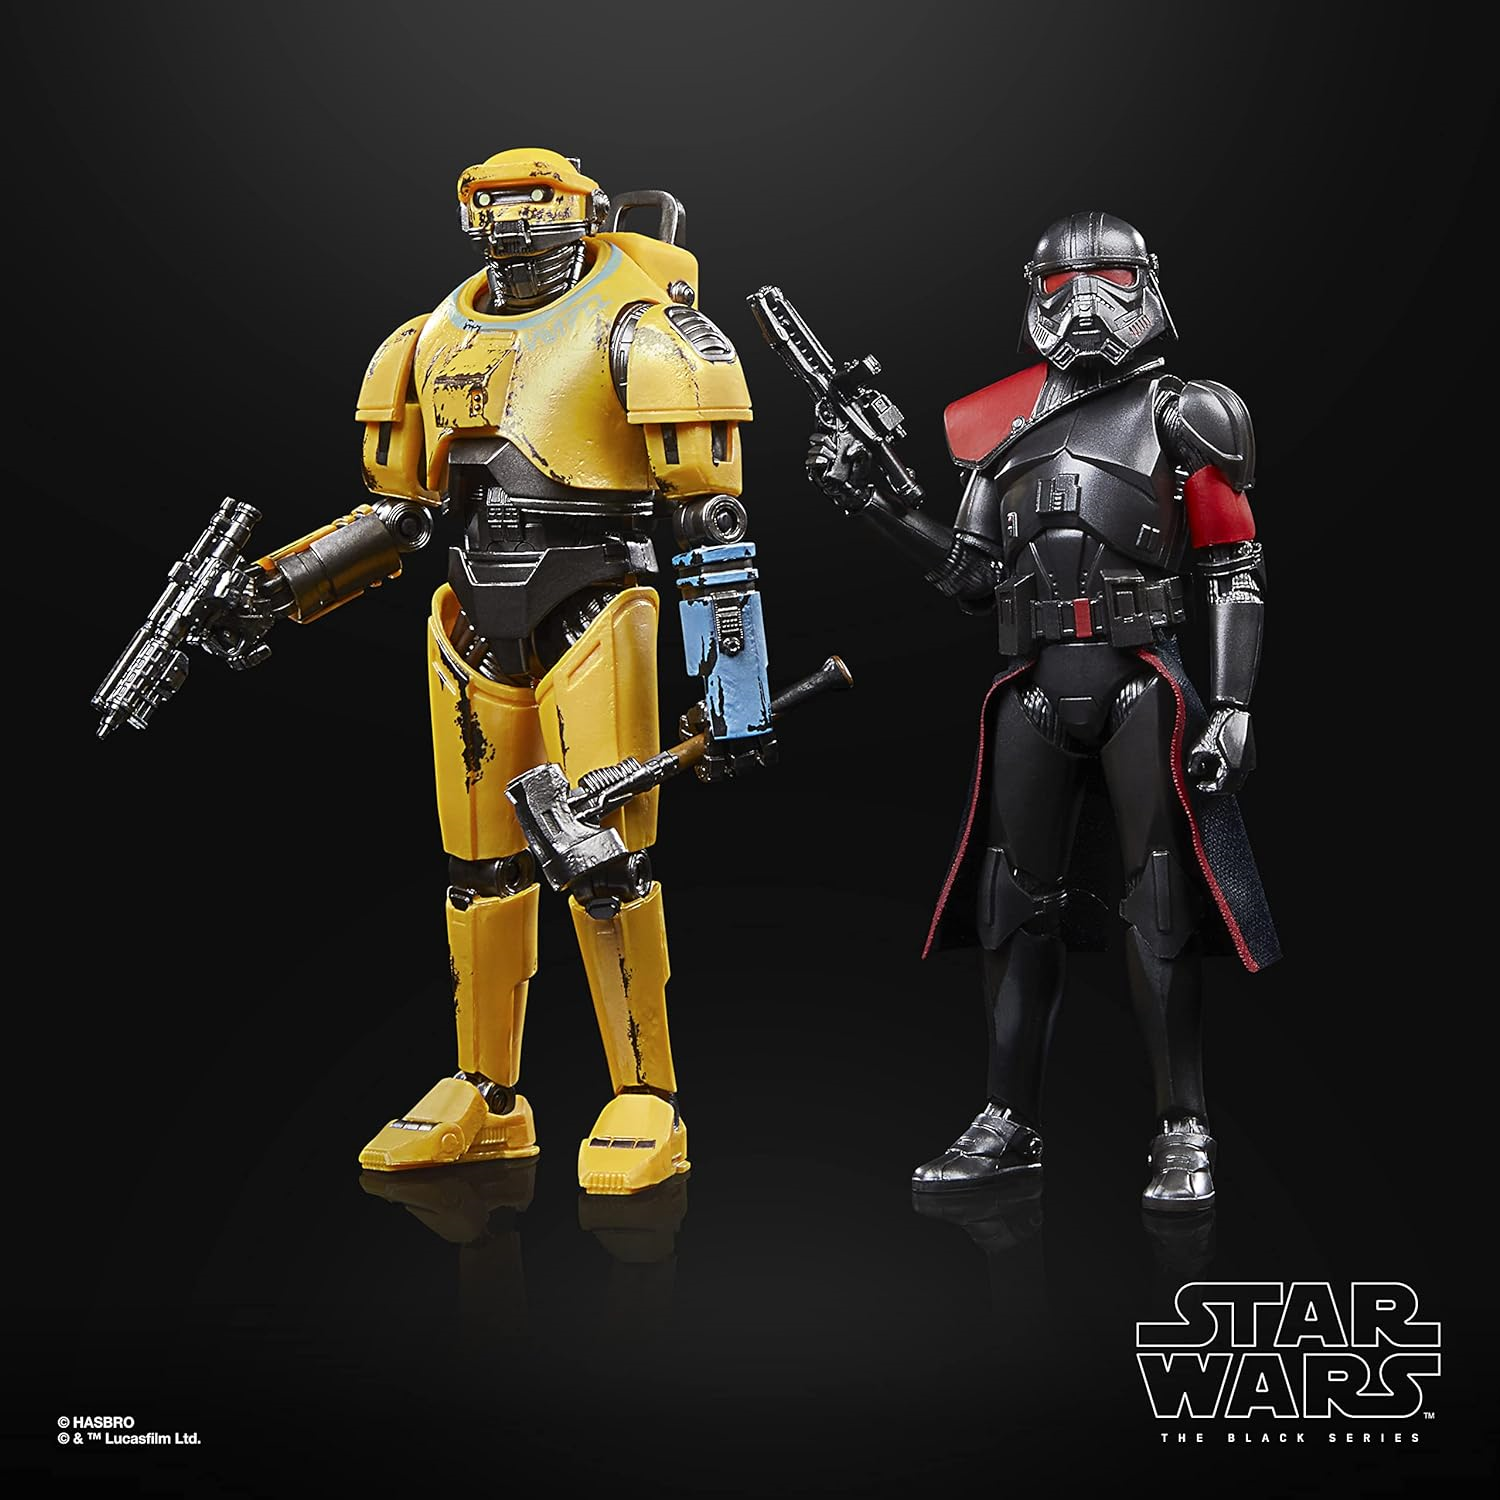 Star Wars The Black Series Ned-B & Purge Trooper - 2 Pack 15cm F70125S0 5010996150172